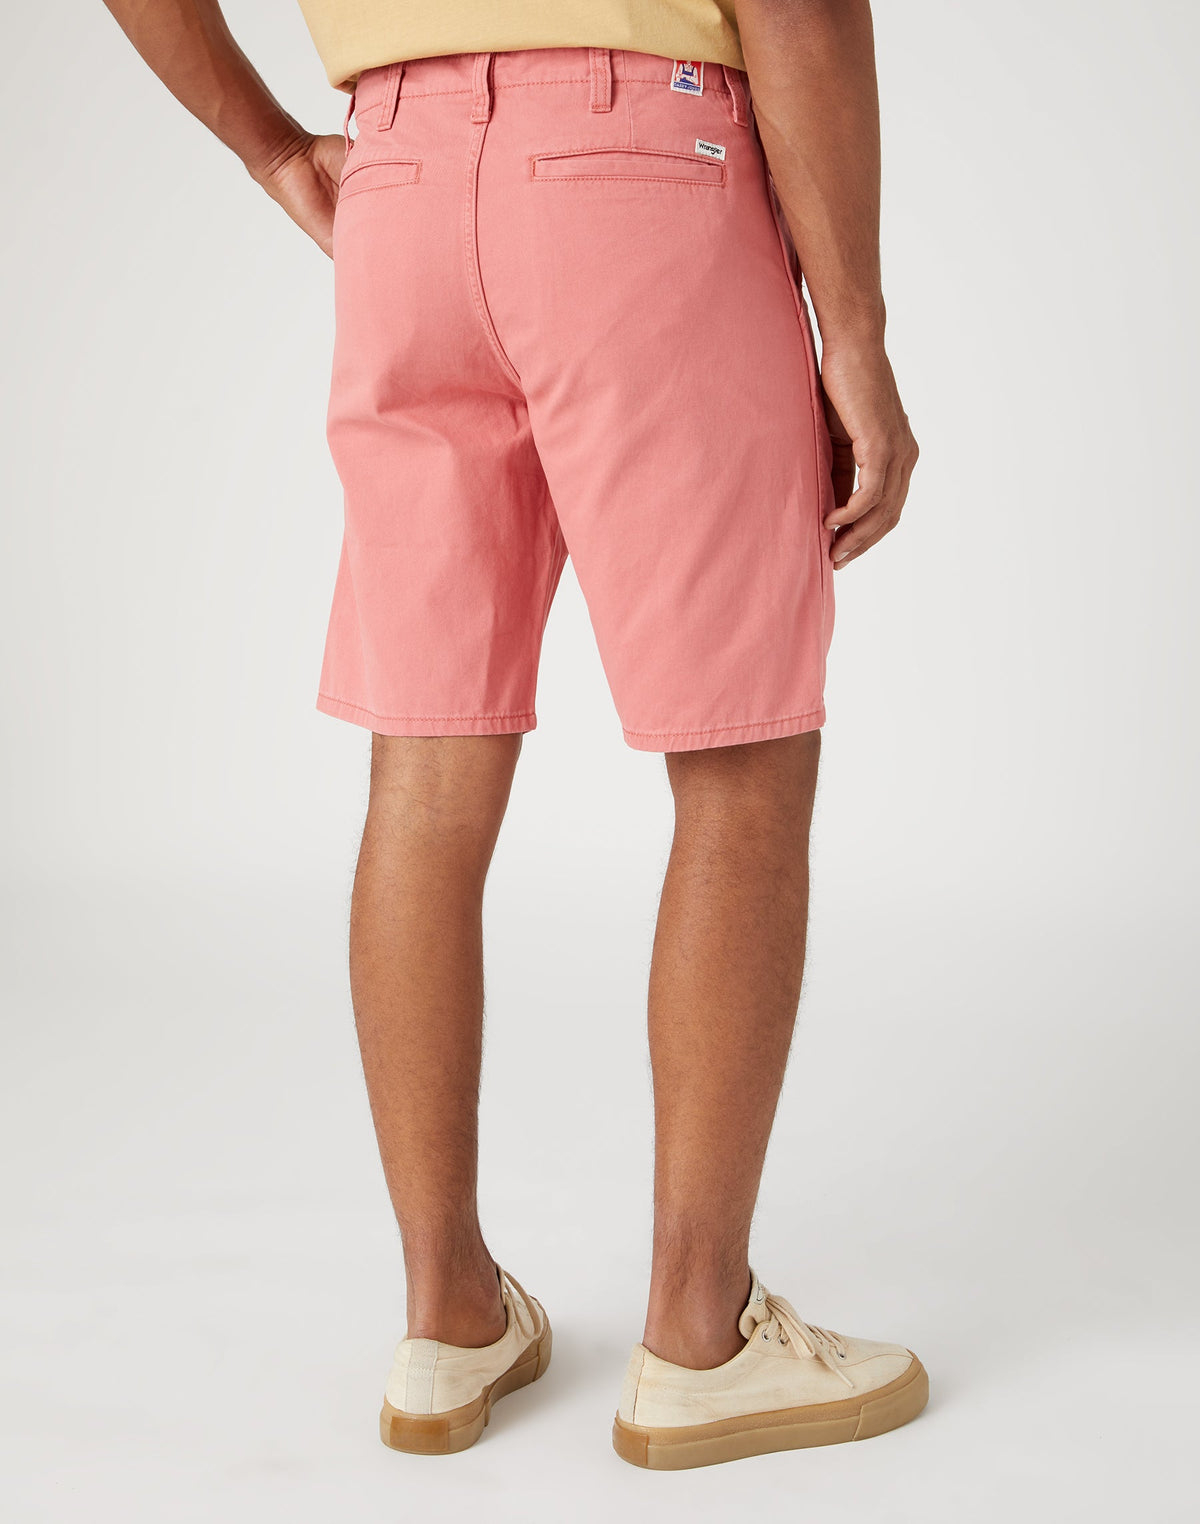 Casey Jones Chino Shorts in Faded Rose